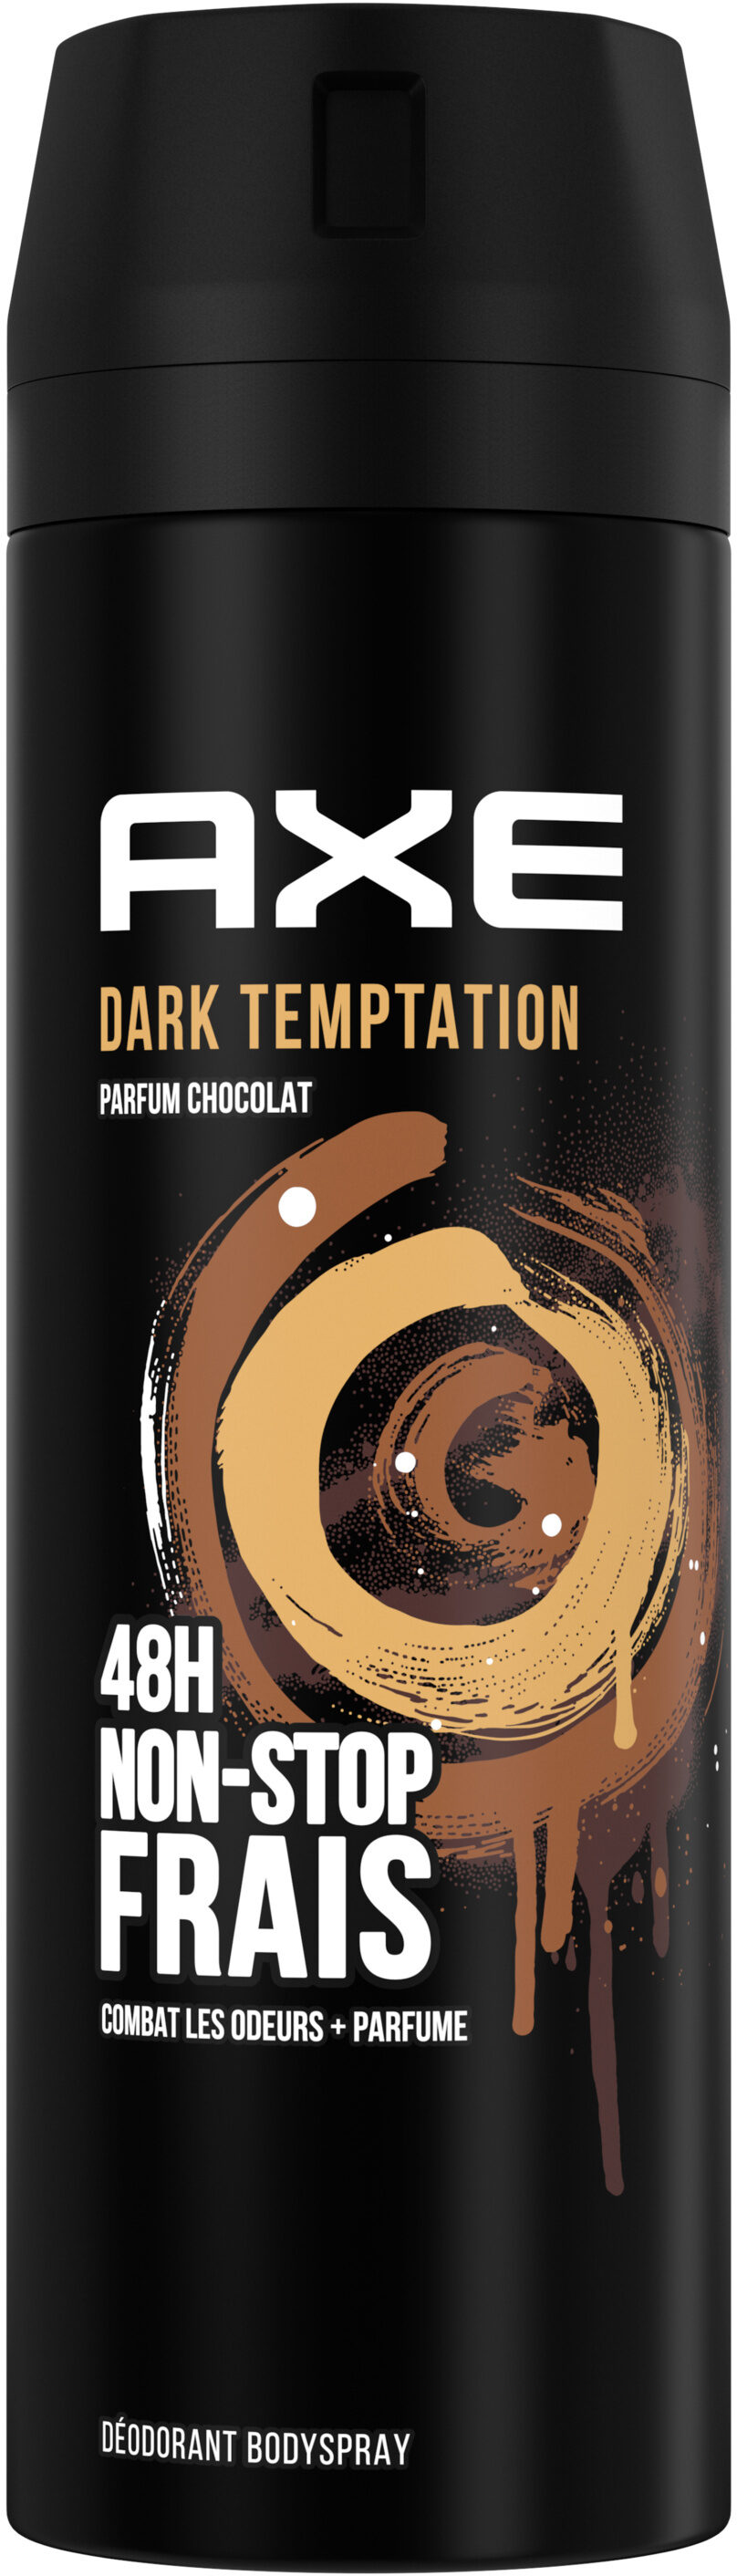 AXE Déodorant Homme Bodyspray Dark Temptation 48h Non-Stop Frais - Product - fr